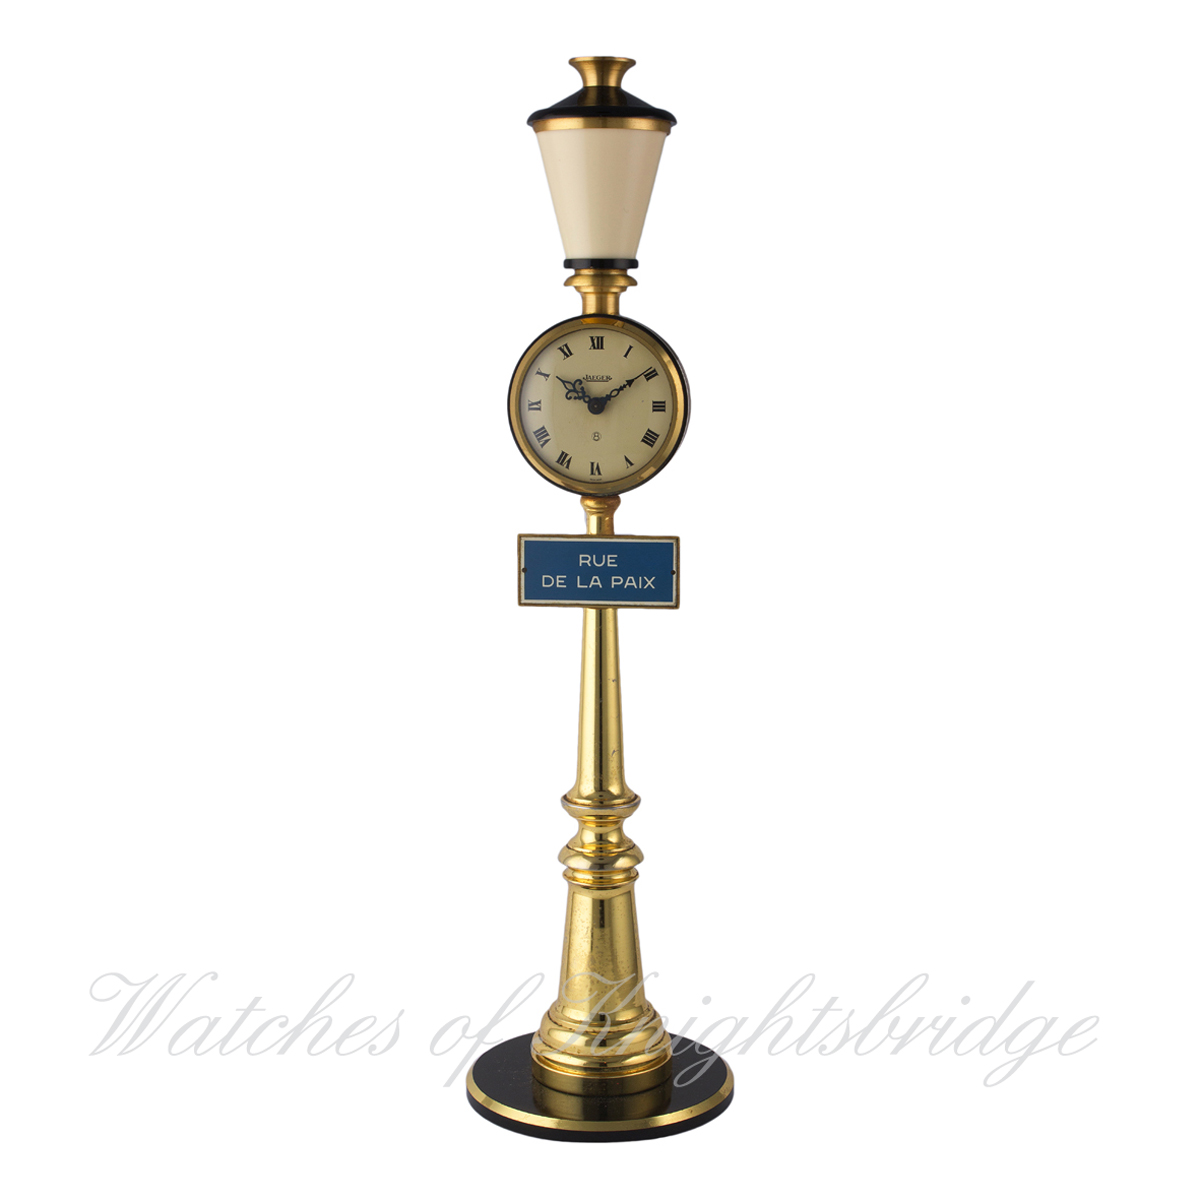 A JAEGER 8 DAY ALARM RUE DE LA PAIX "STREET LAMP" DESK CLOCK CIRCA 1960s
D: Ivory colour dial with